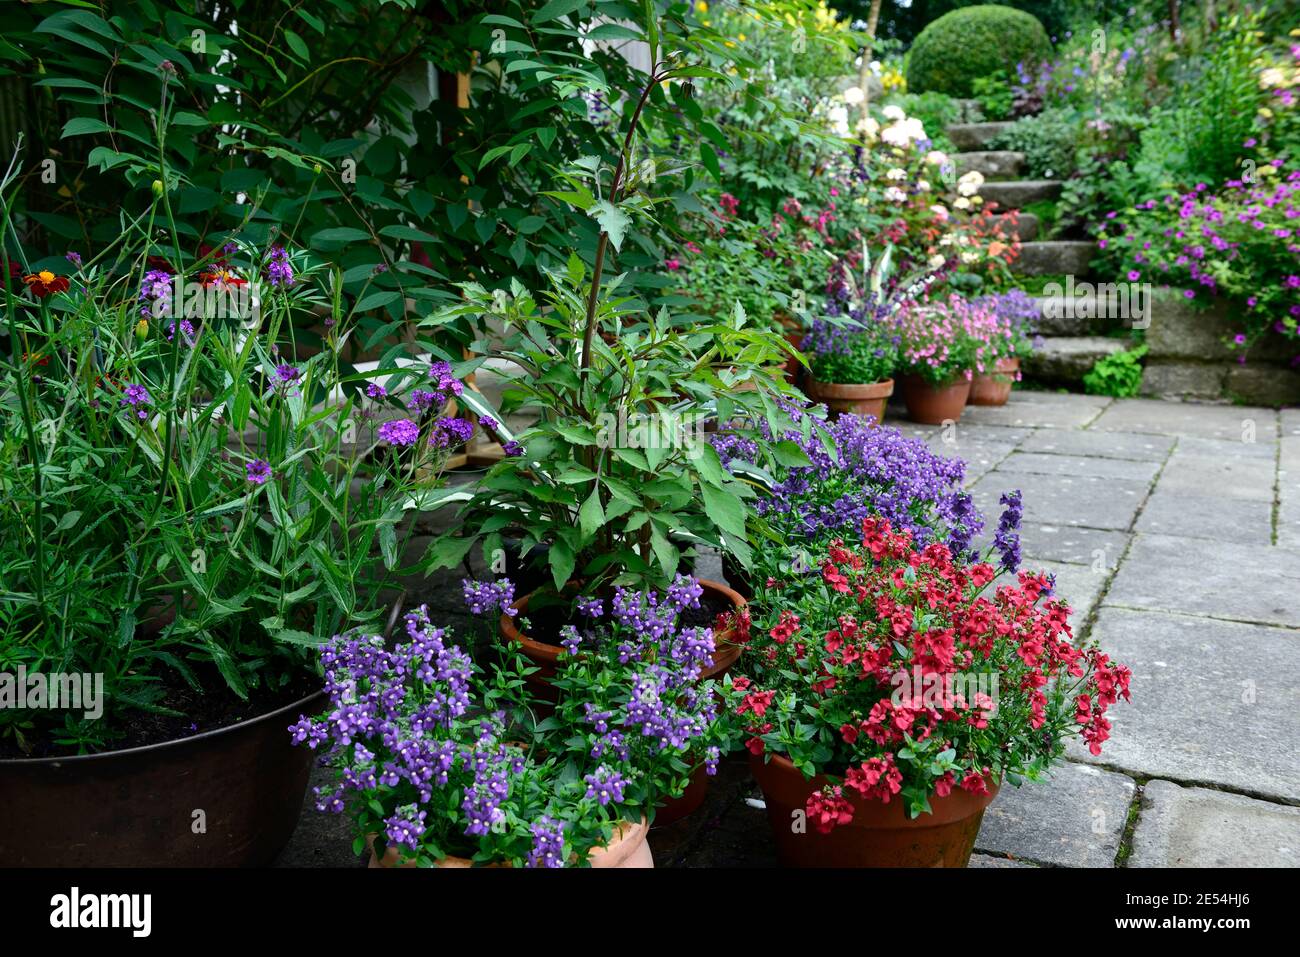 nemesia,diascia,blue red flowers,flowering,pots,containers,plant pots,container gardening,terrace,patio,courtyard,setting garden design,garden feature Stock Photo